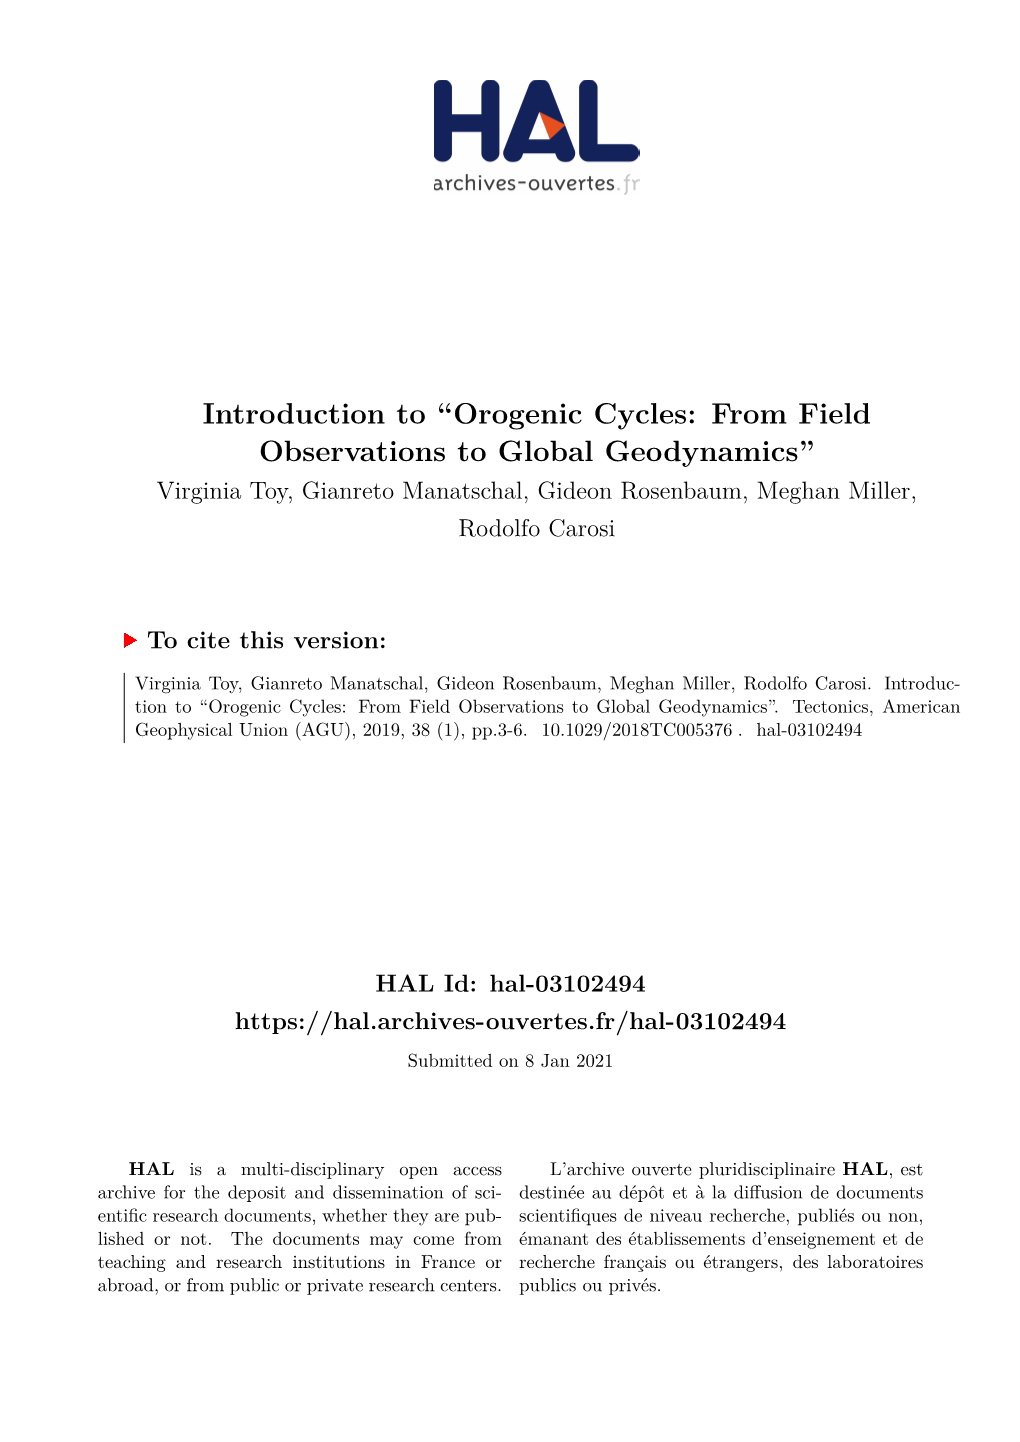 Introduction to “Orogenic Cycles: from Field Observations to Global Geodynamics” Virginia Toy, Gianreto Manatschal, Gideon Rosenbaum, Meghan Miller, Rodolfo Carosi